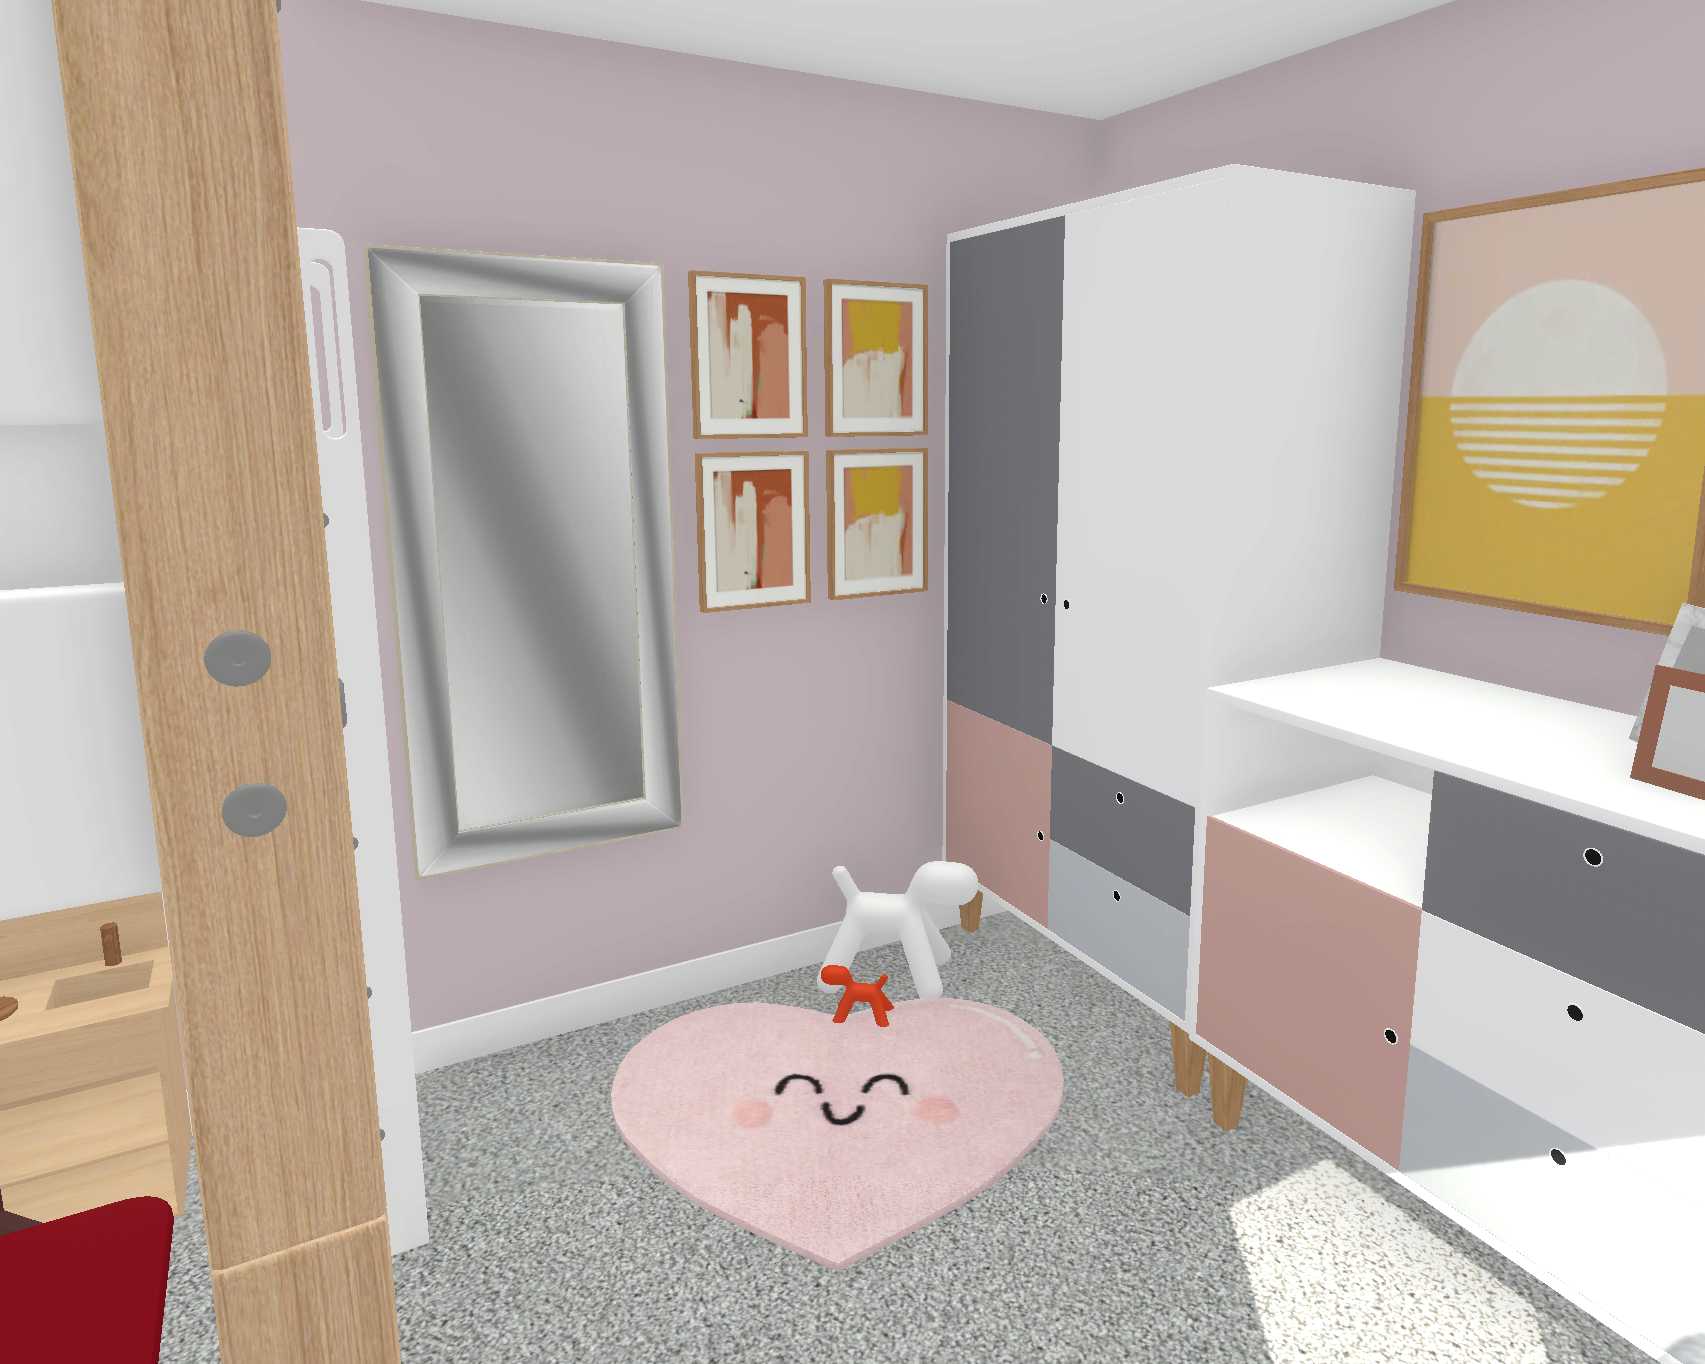 pink bedroom design